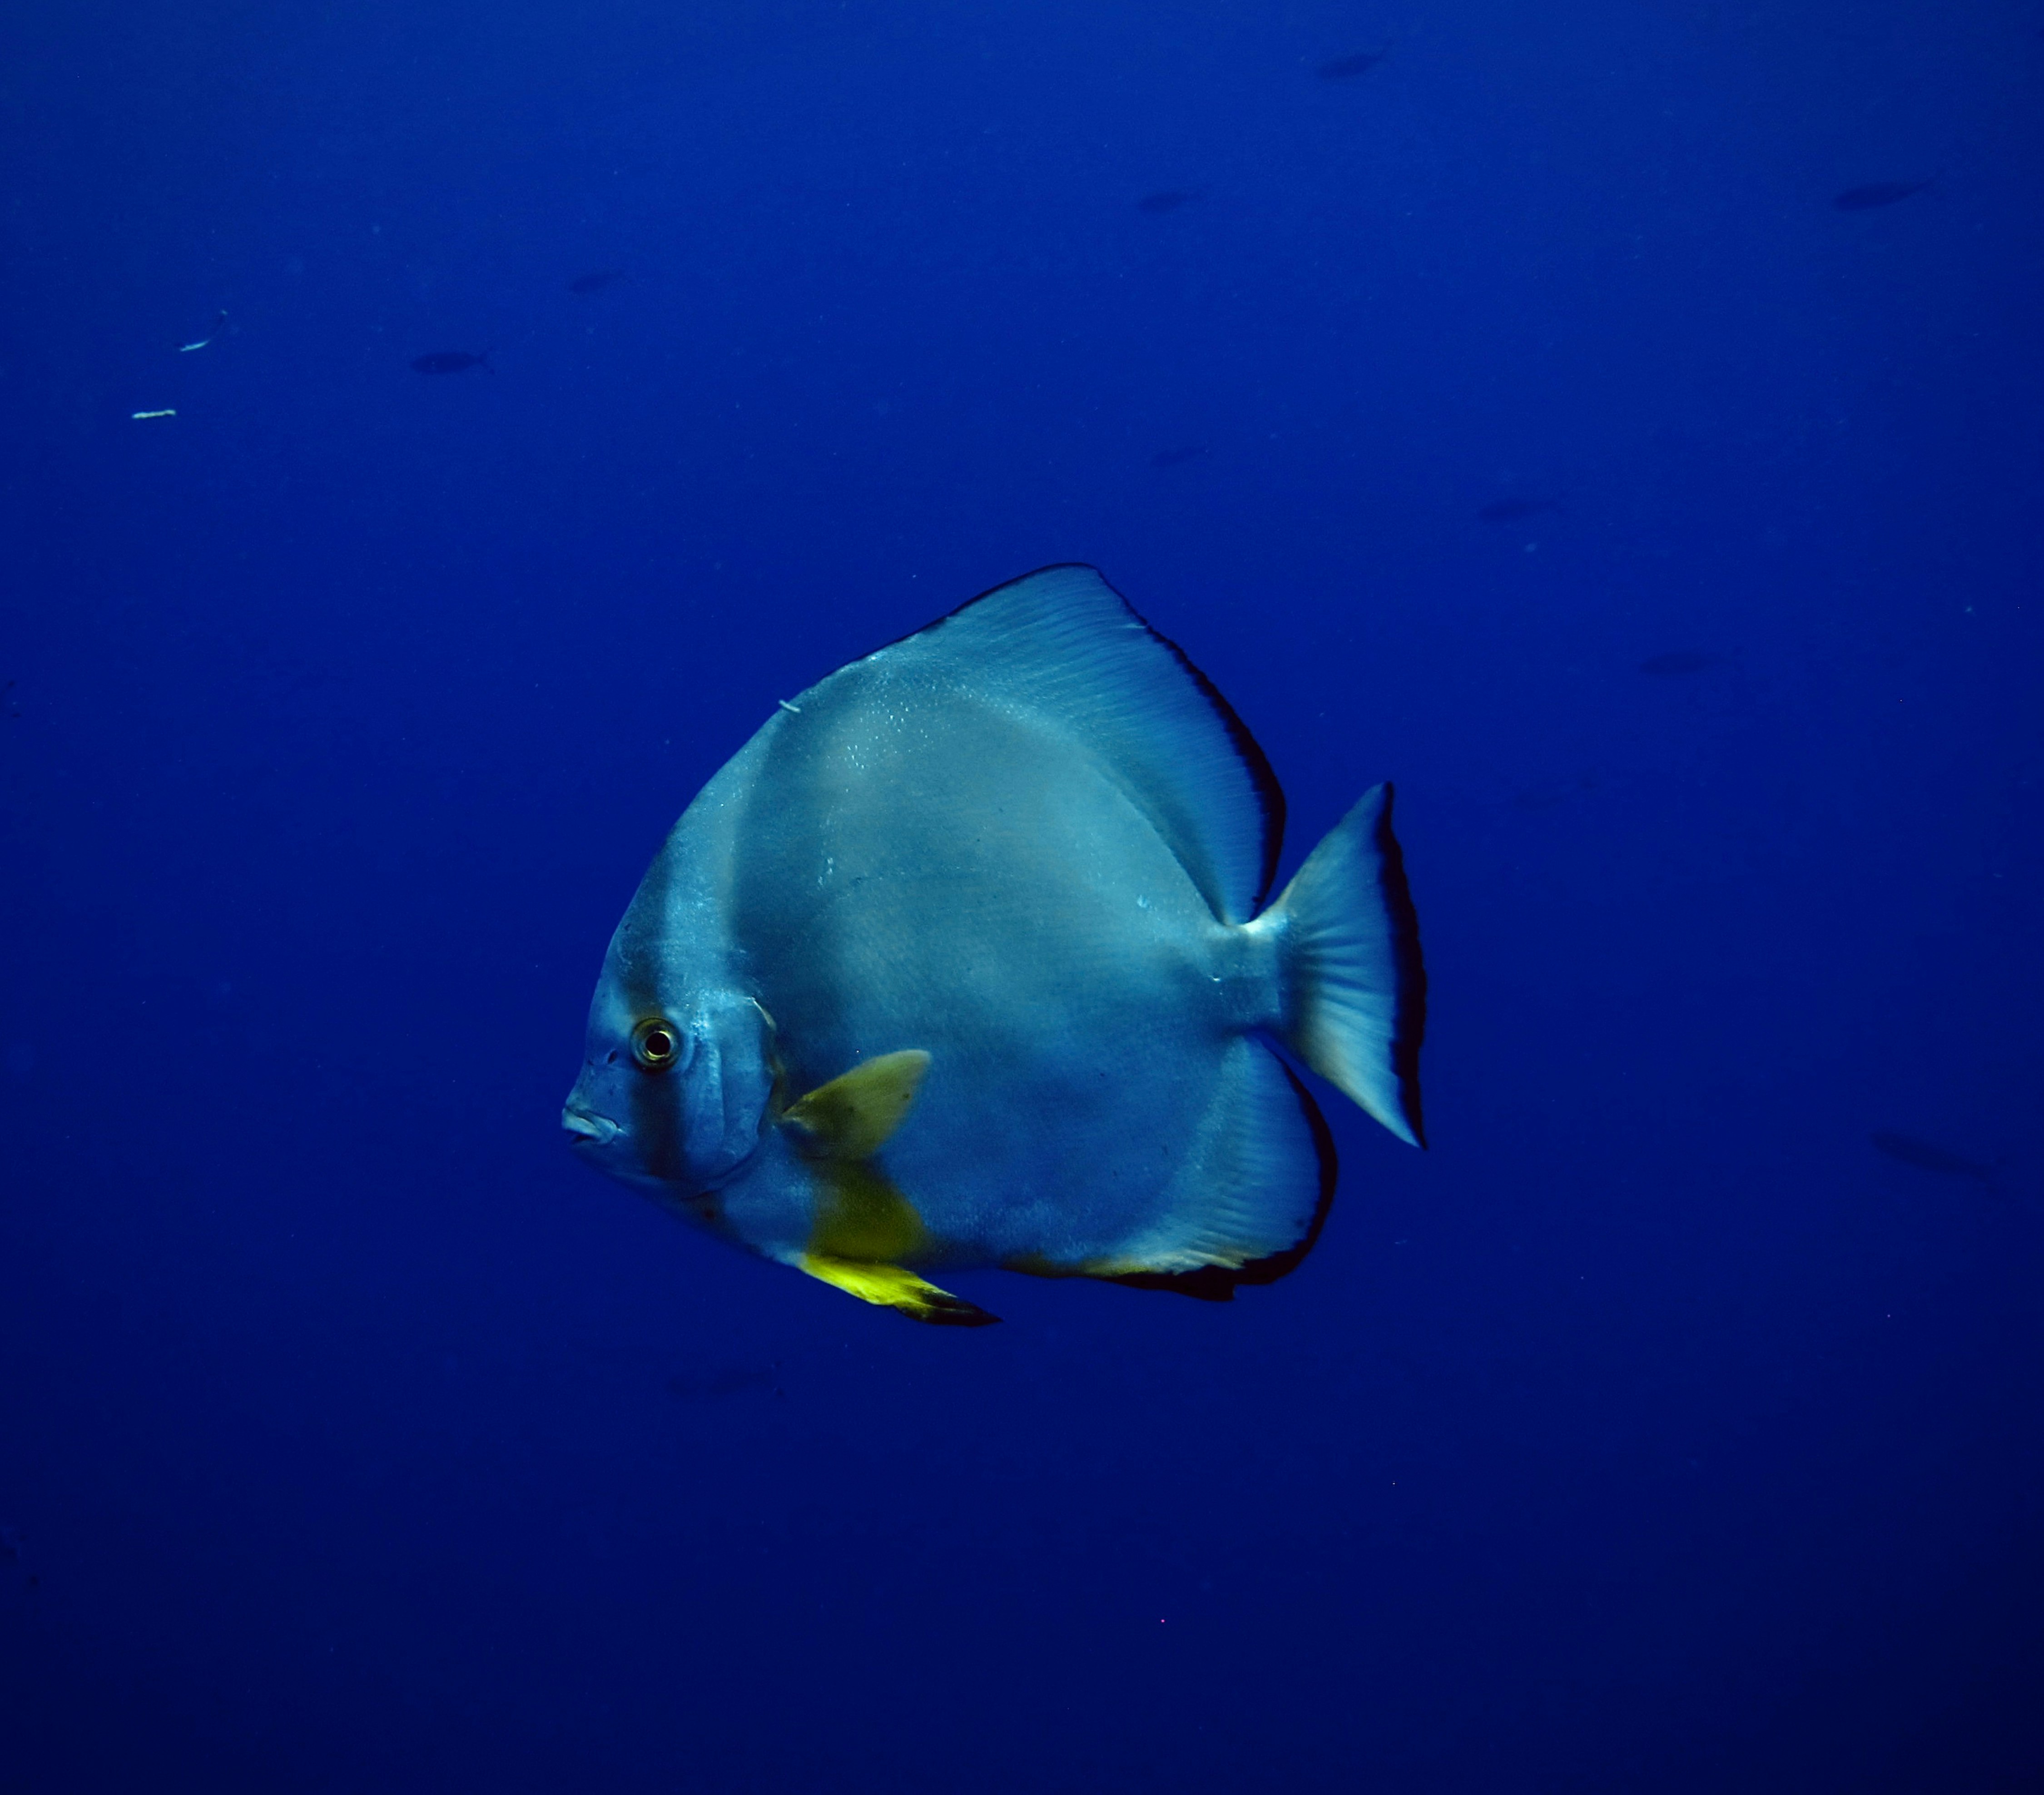 blue and yellow fish underwater